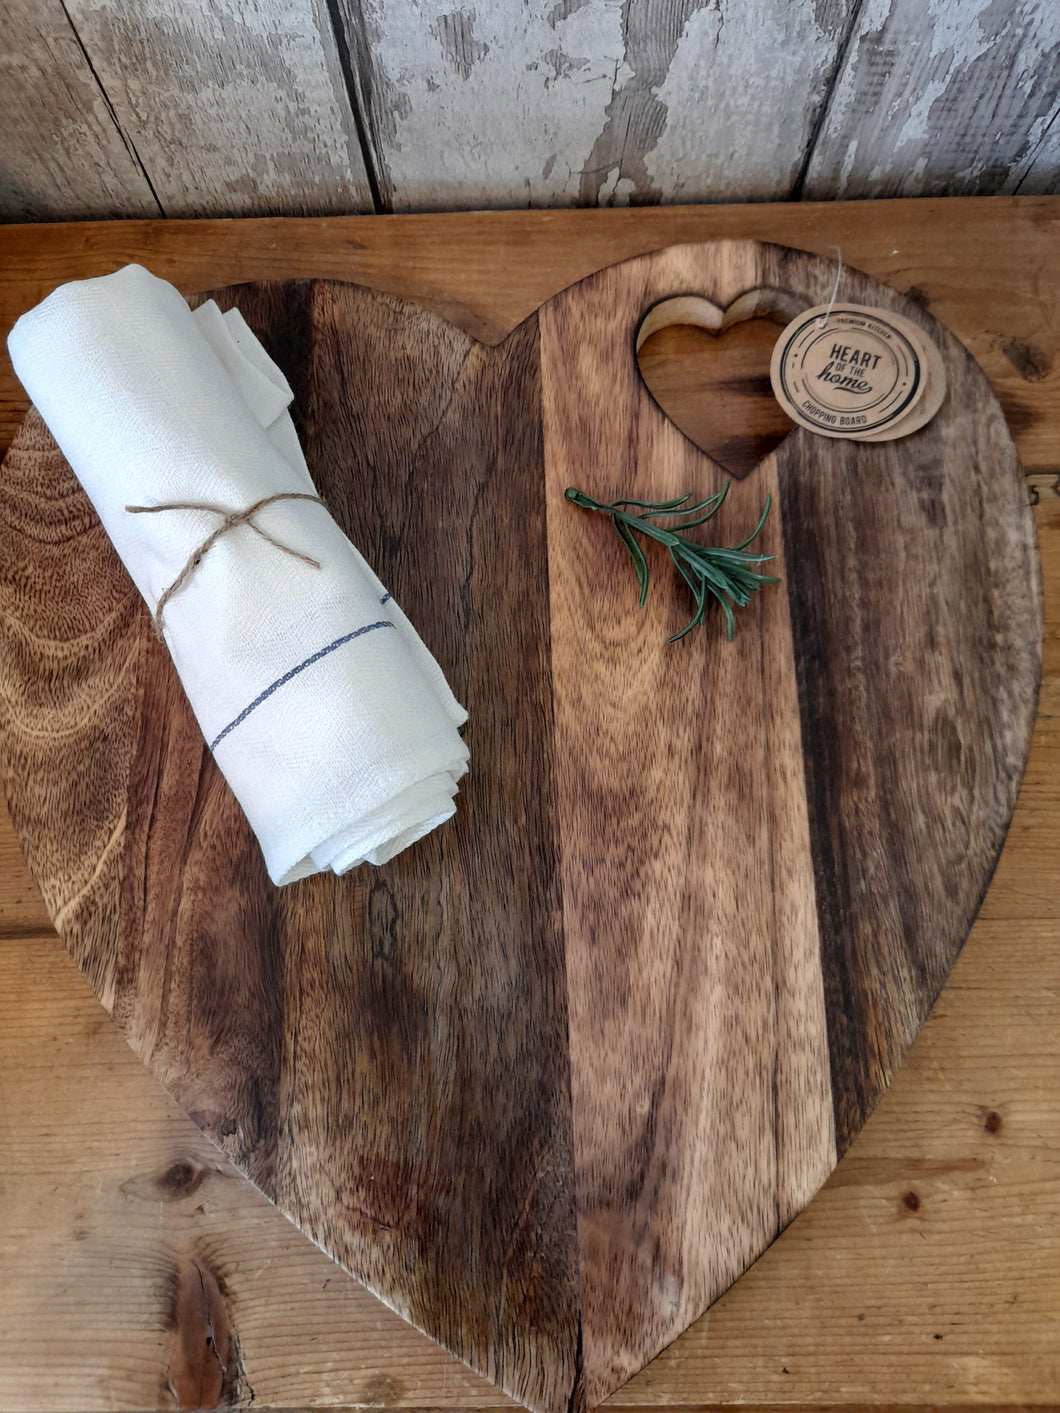 Heart shaped natural wooden chopping board